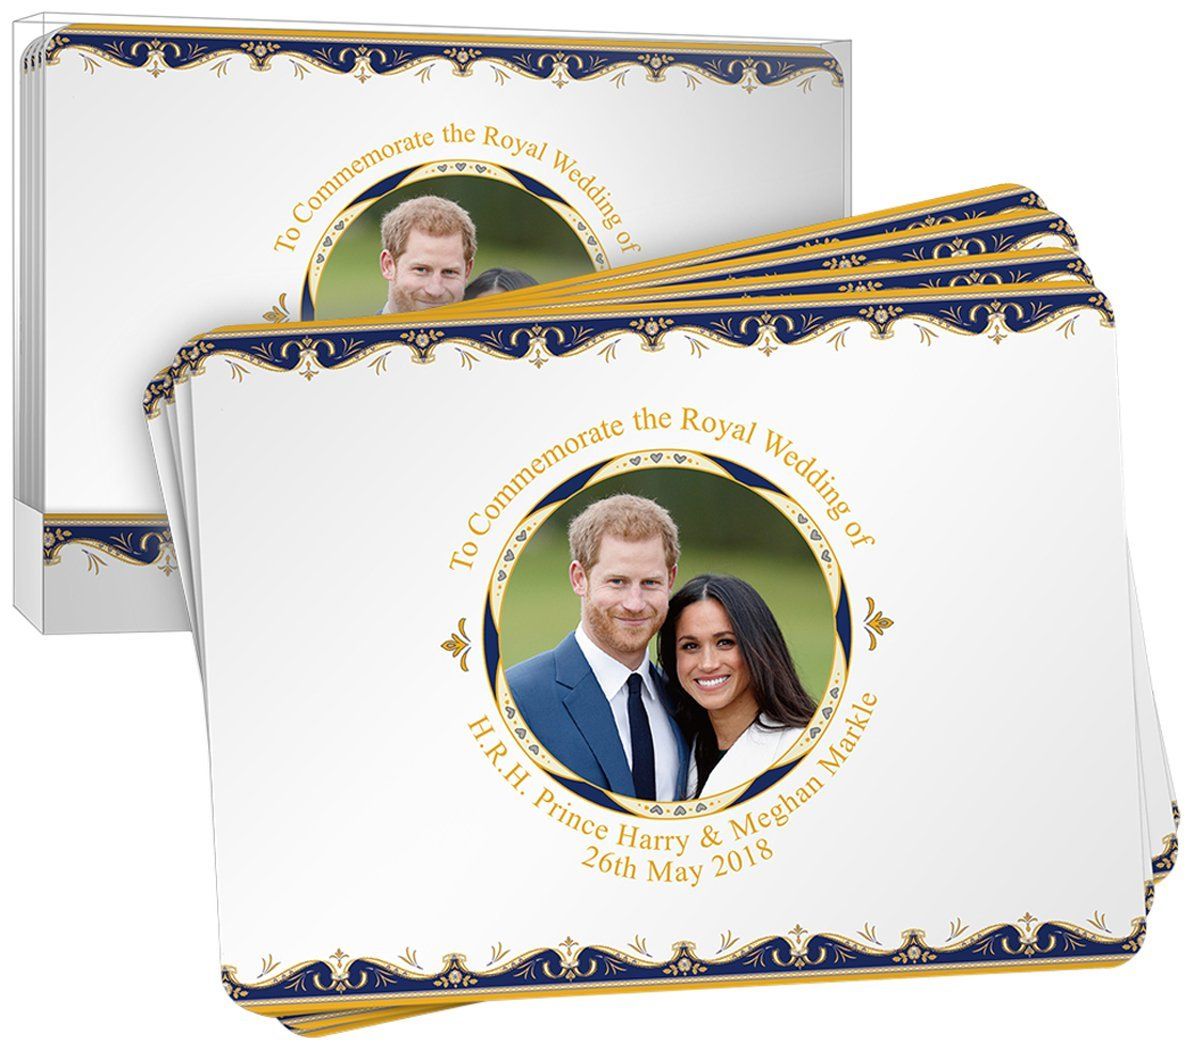 The Royal Wedding Harry & Meghan Royal Couple Oval Metal Commemorative Key Fob 